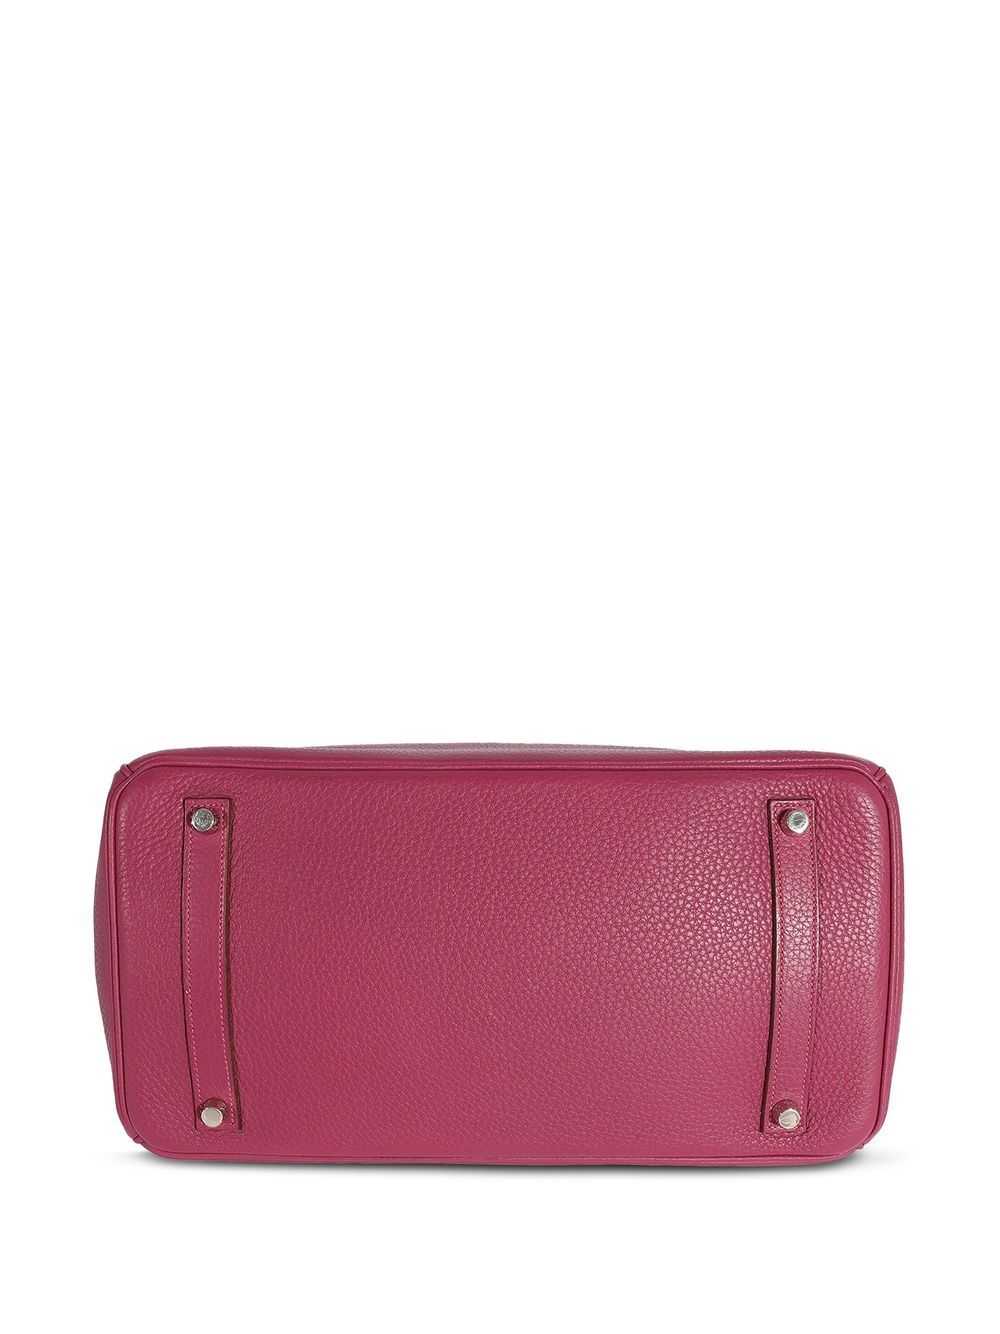 Hermès Pre-Owned Birkin 35 handbag - Pink - image 4